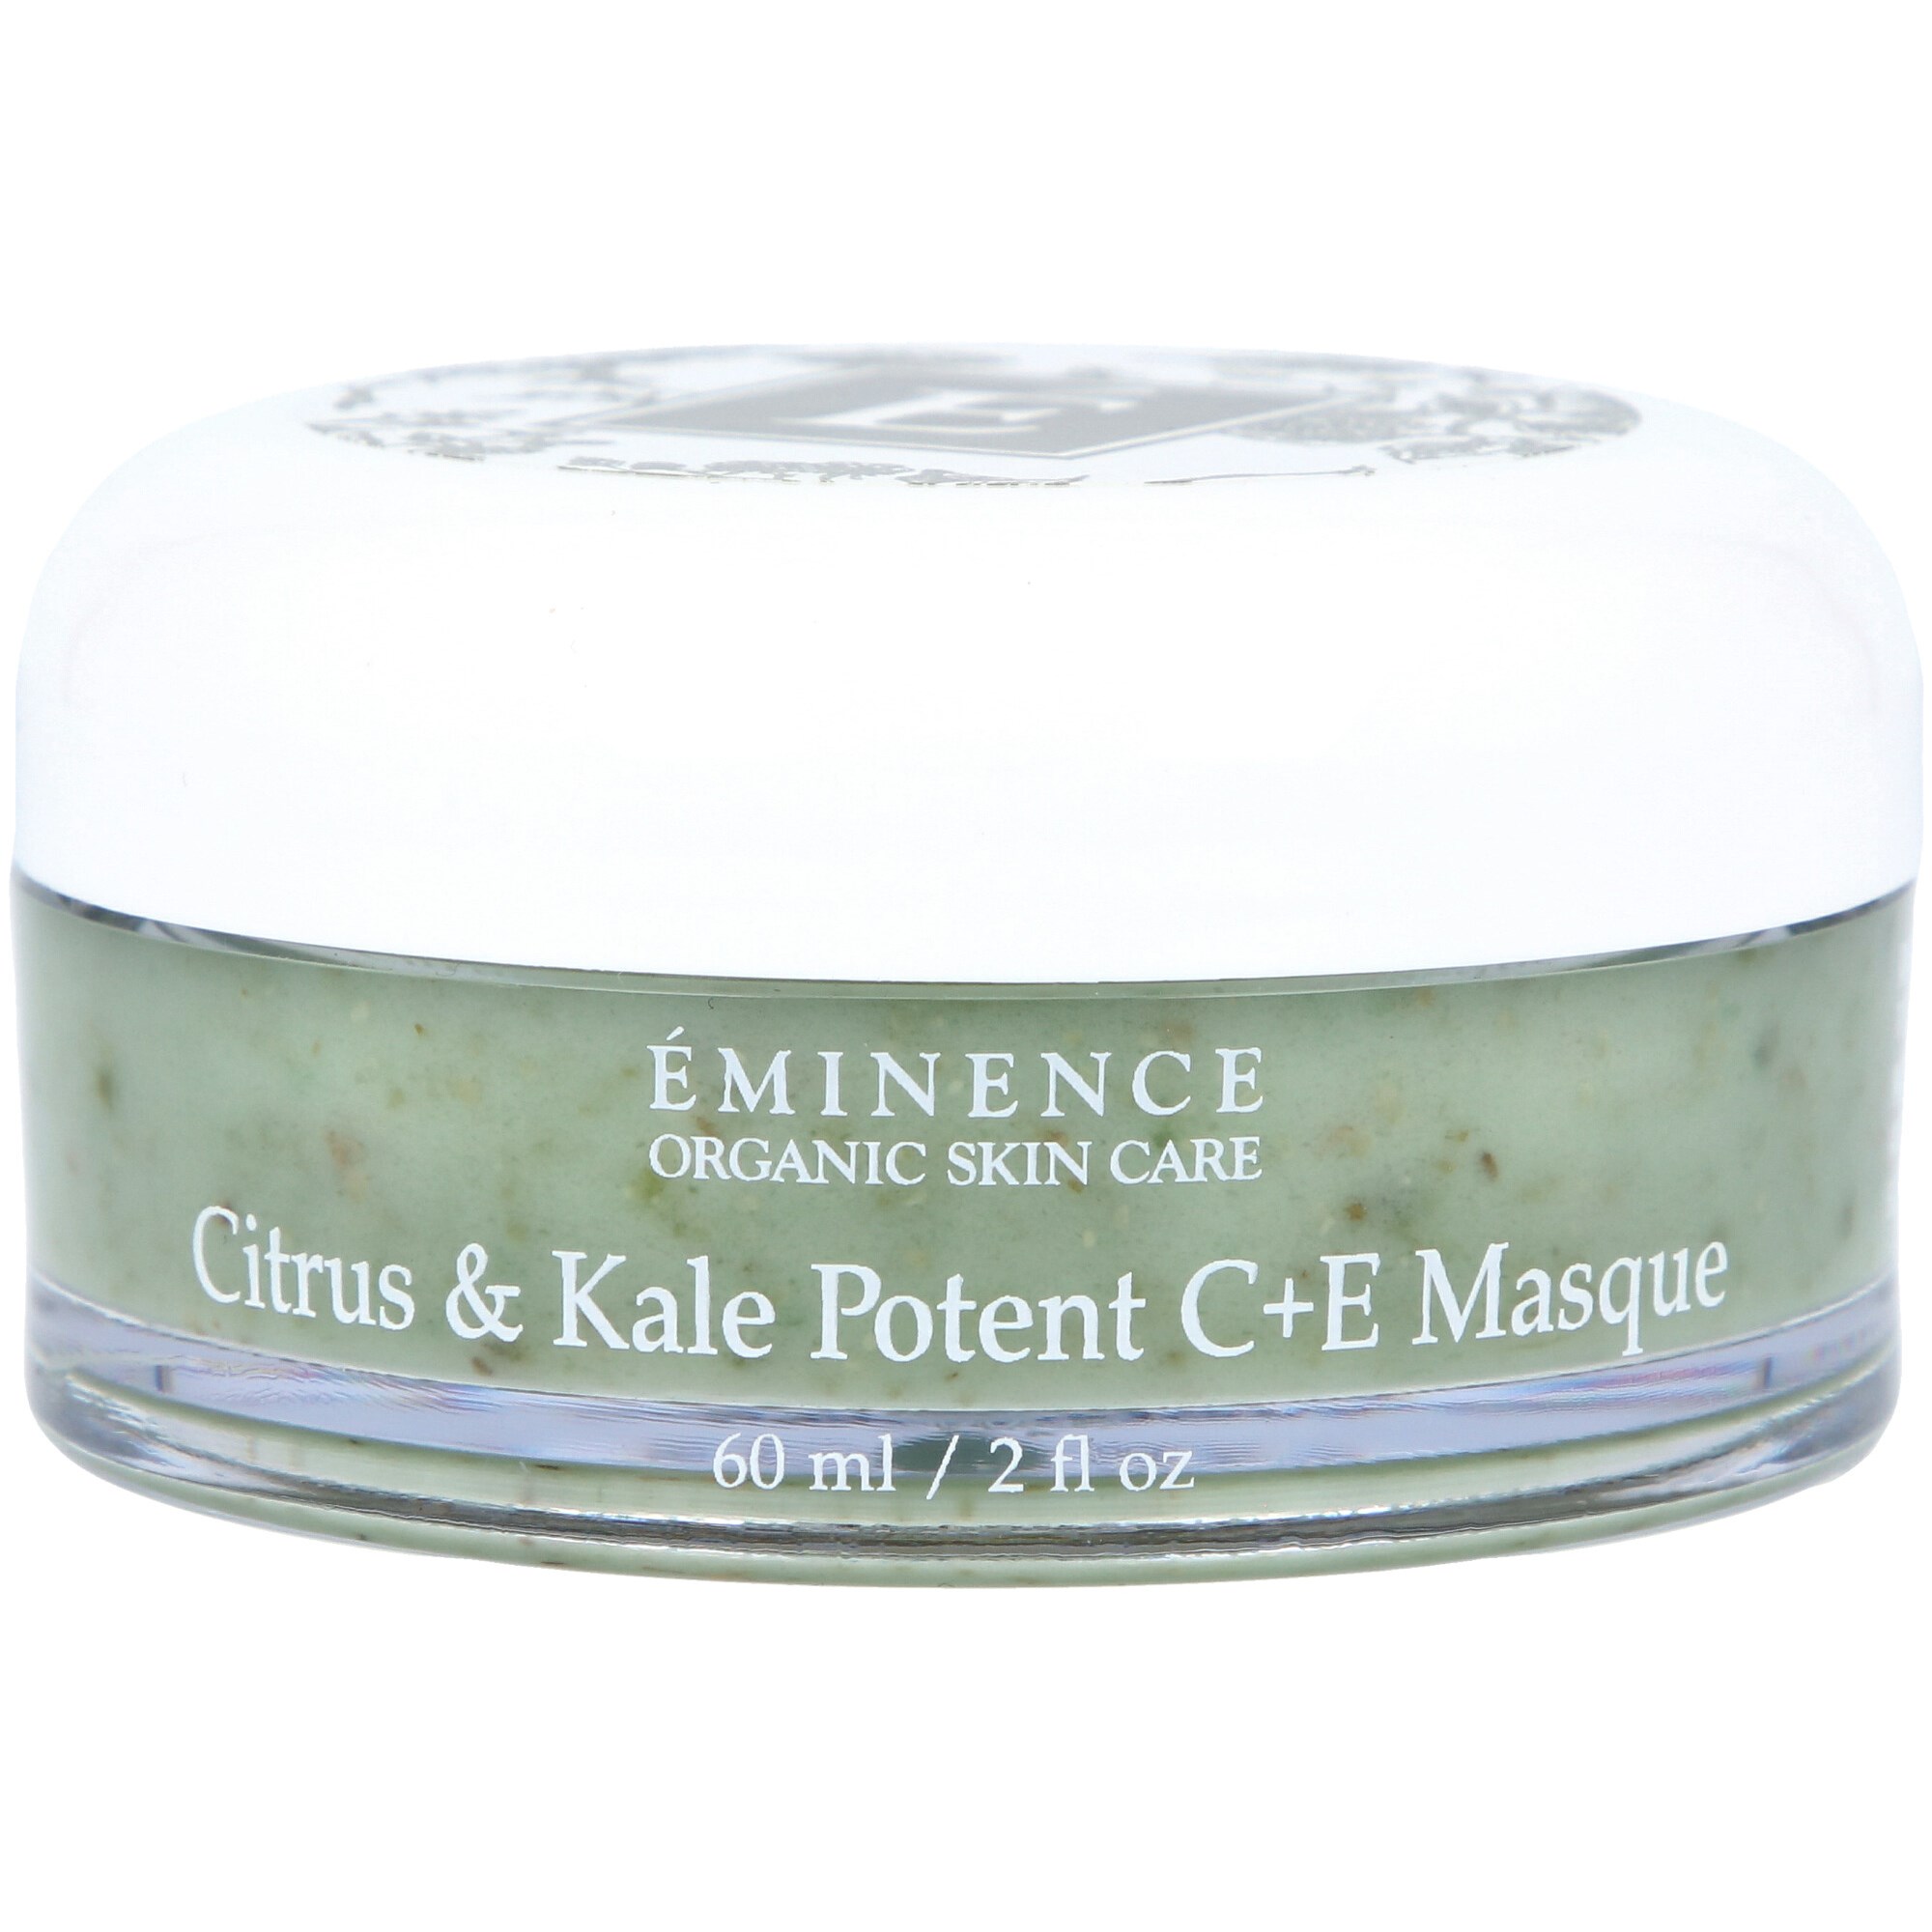 Läs mer om Eminence Organics Citrus & Kale Potent C+ E Masque 60 ml